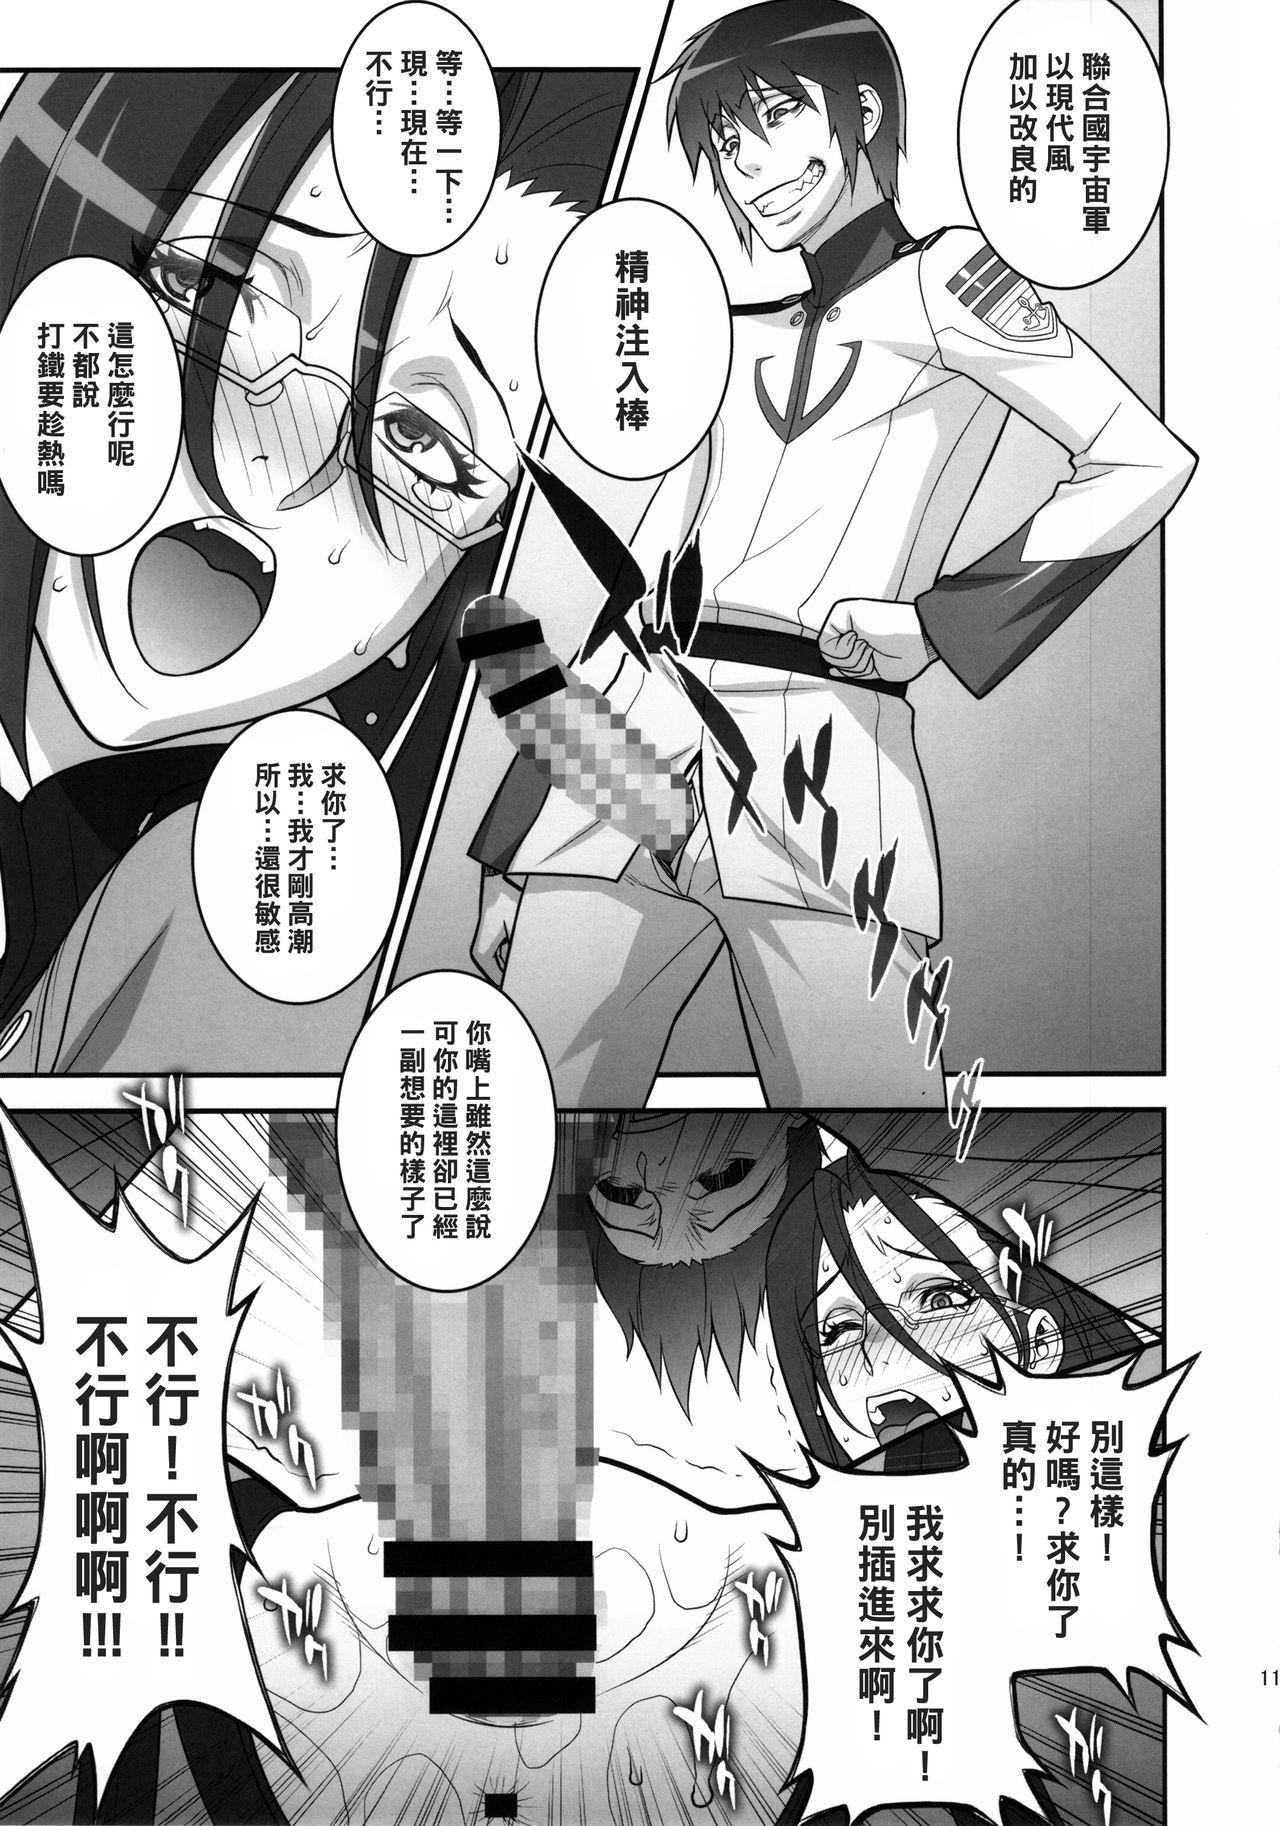 Trimmed Ero Niku Onna Shikan Dono - Space battleship yamato 2199 Friends - Page 10